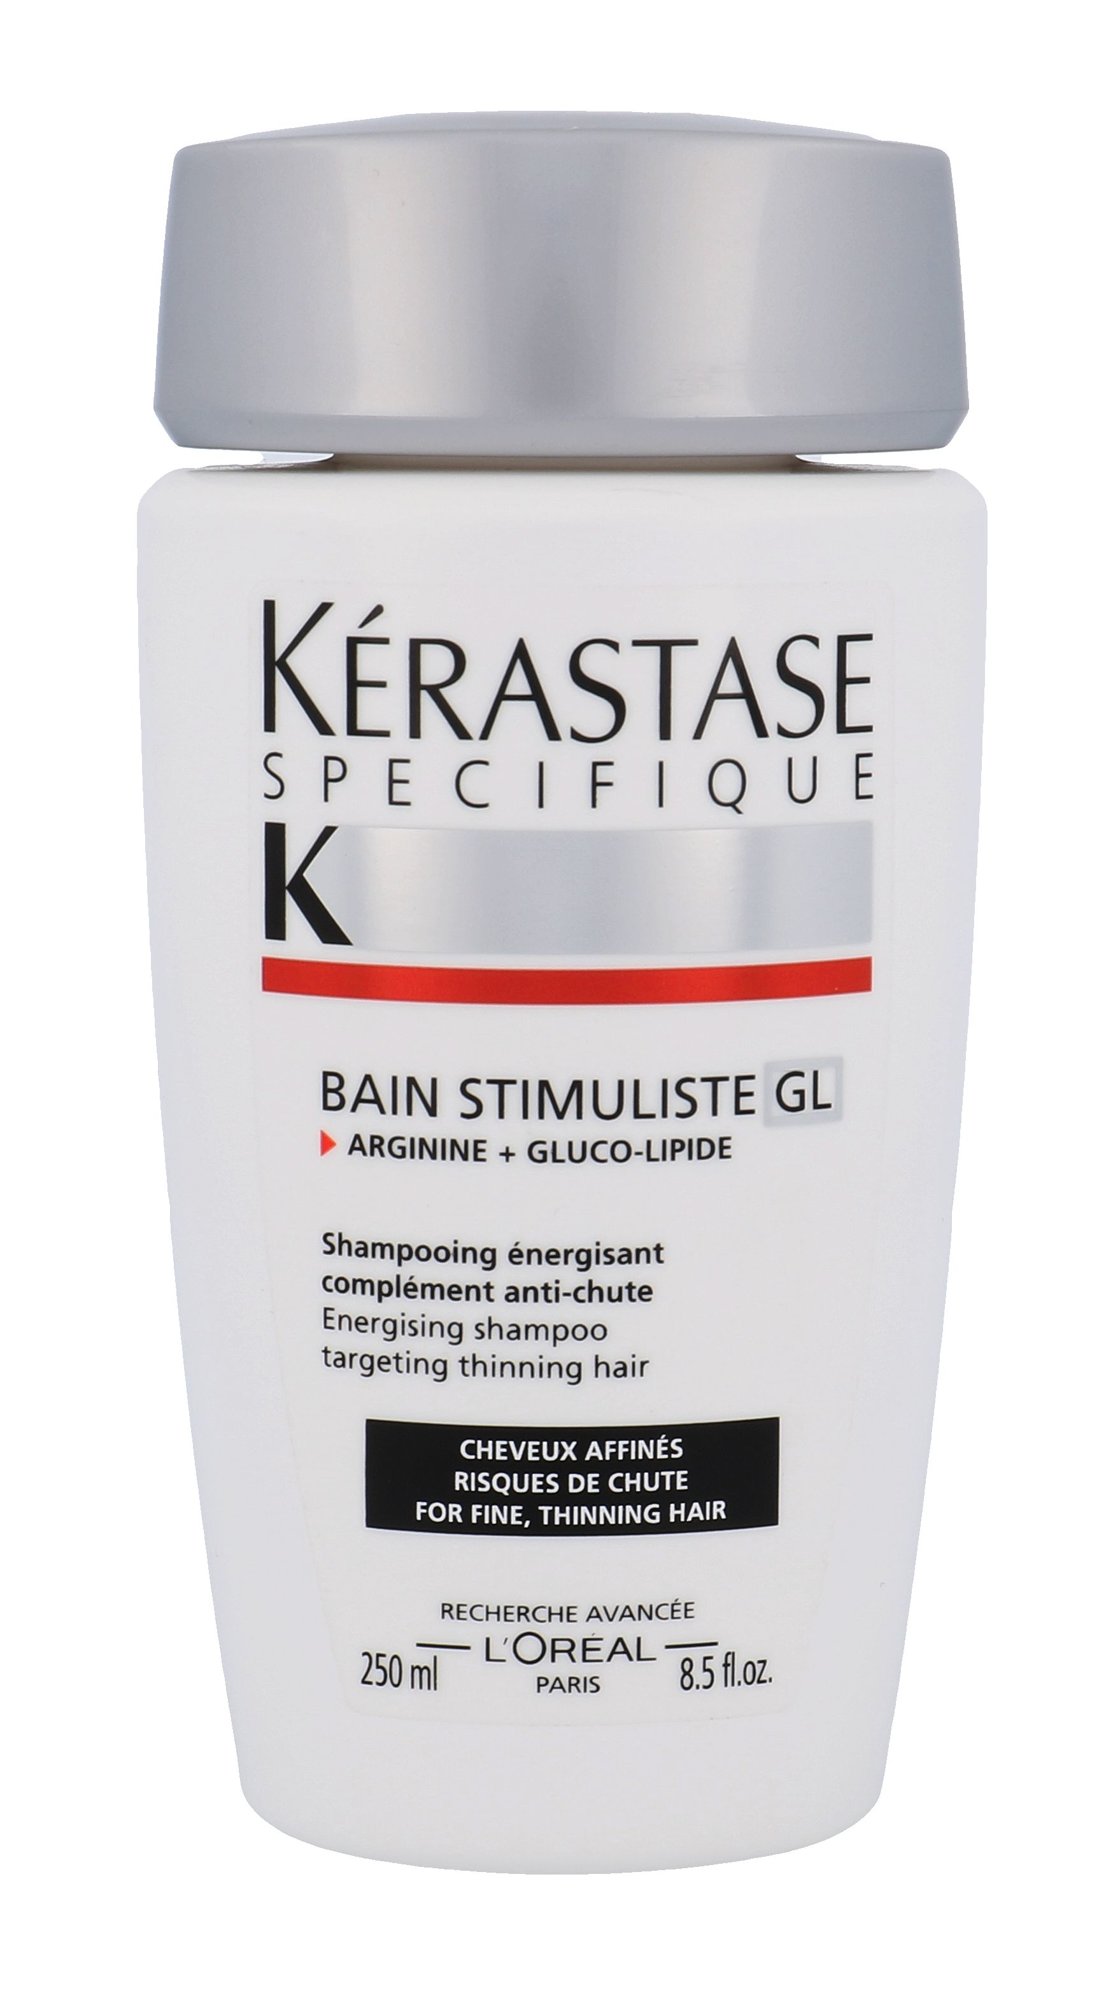 Kerastase Specifique Bain Stimuliste GL Energising Shampoo